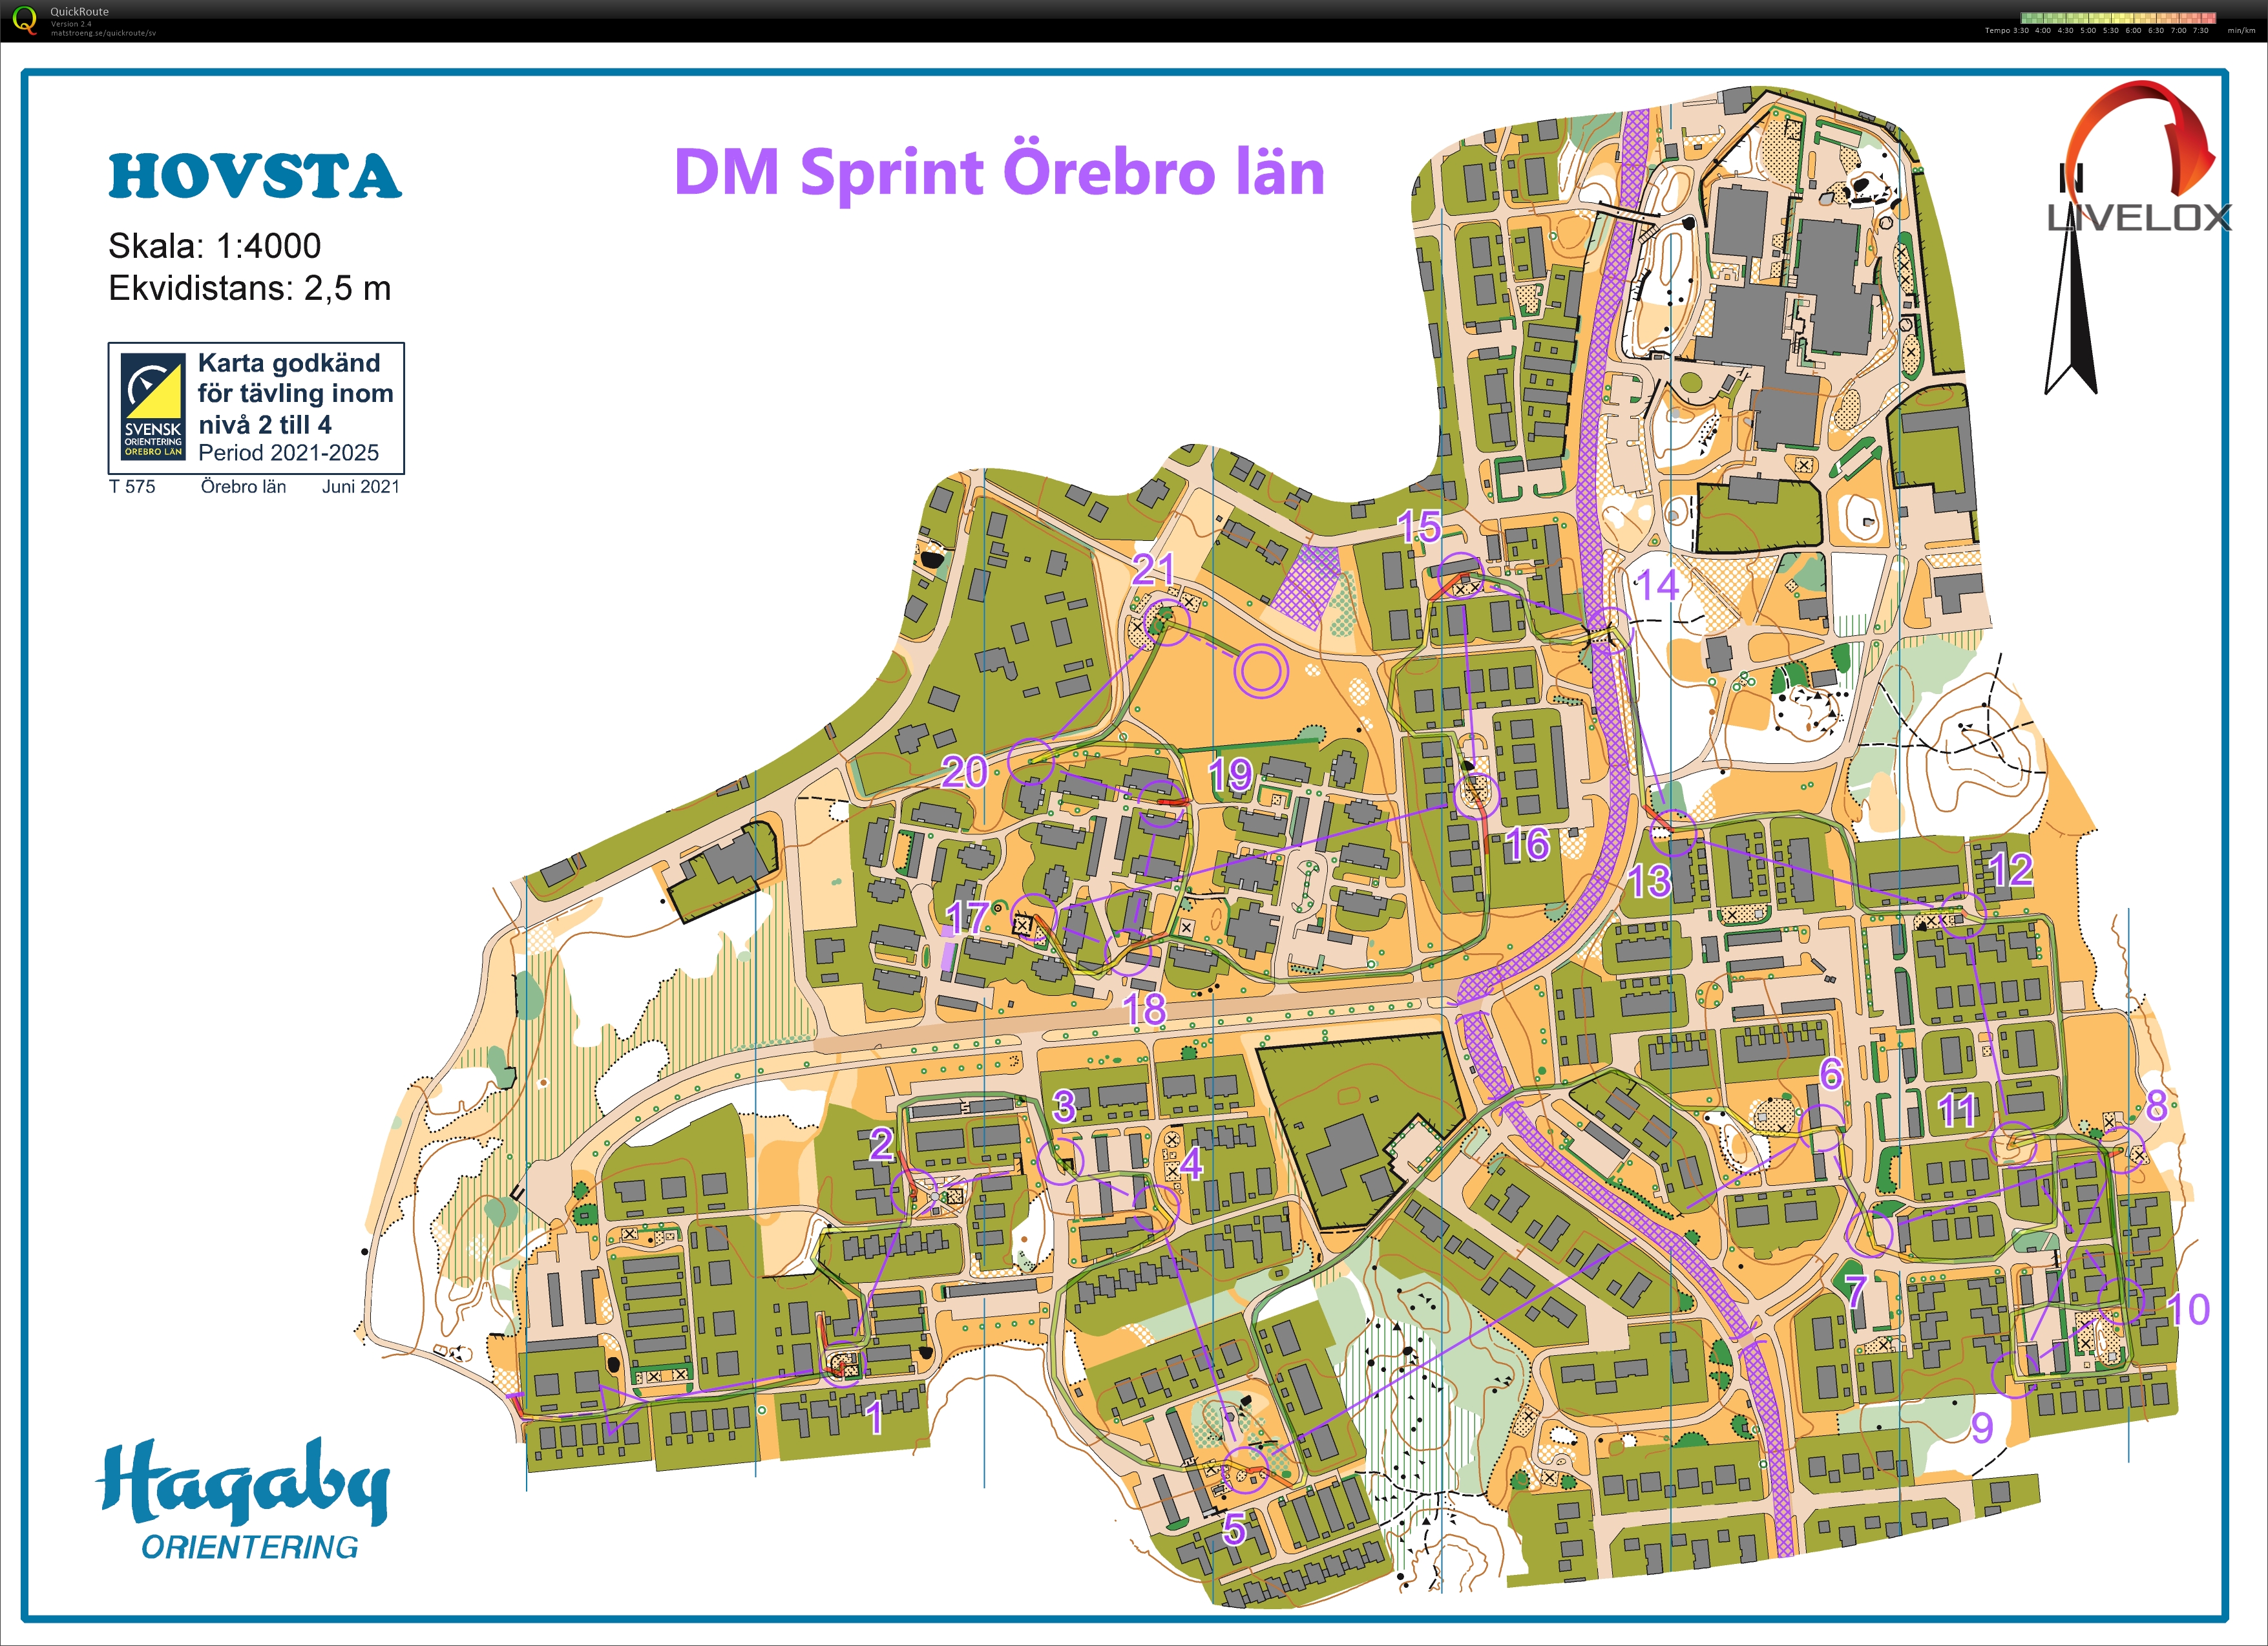 DM sprint Örebro (12-06-2021)